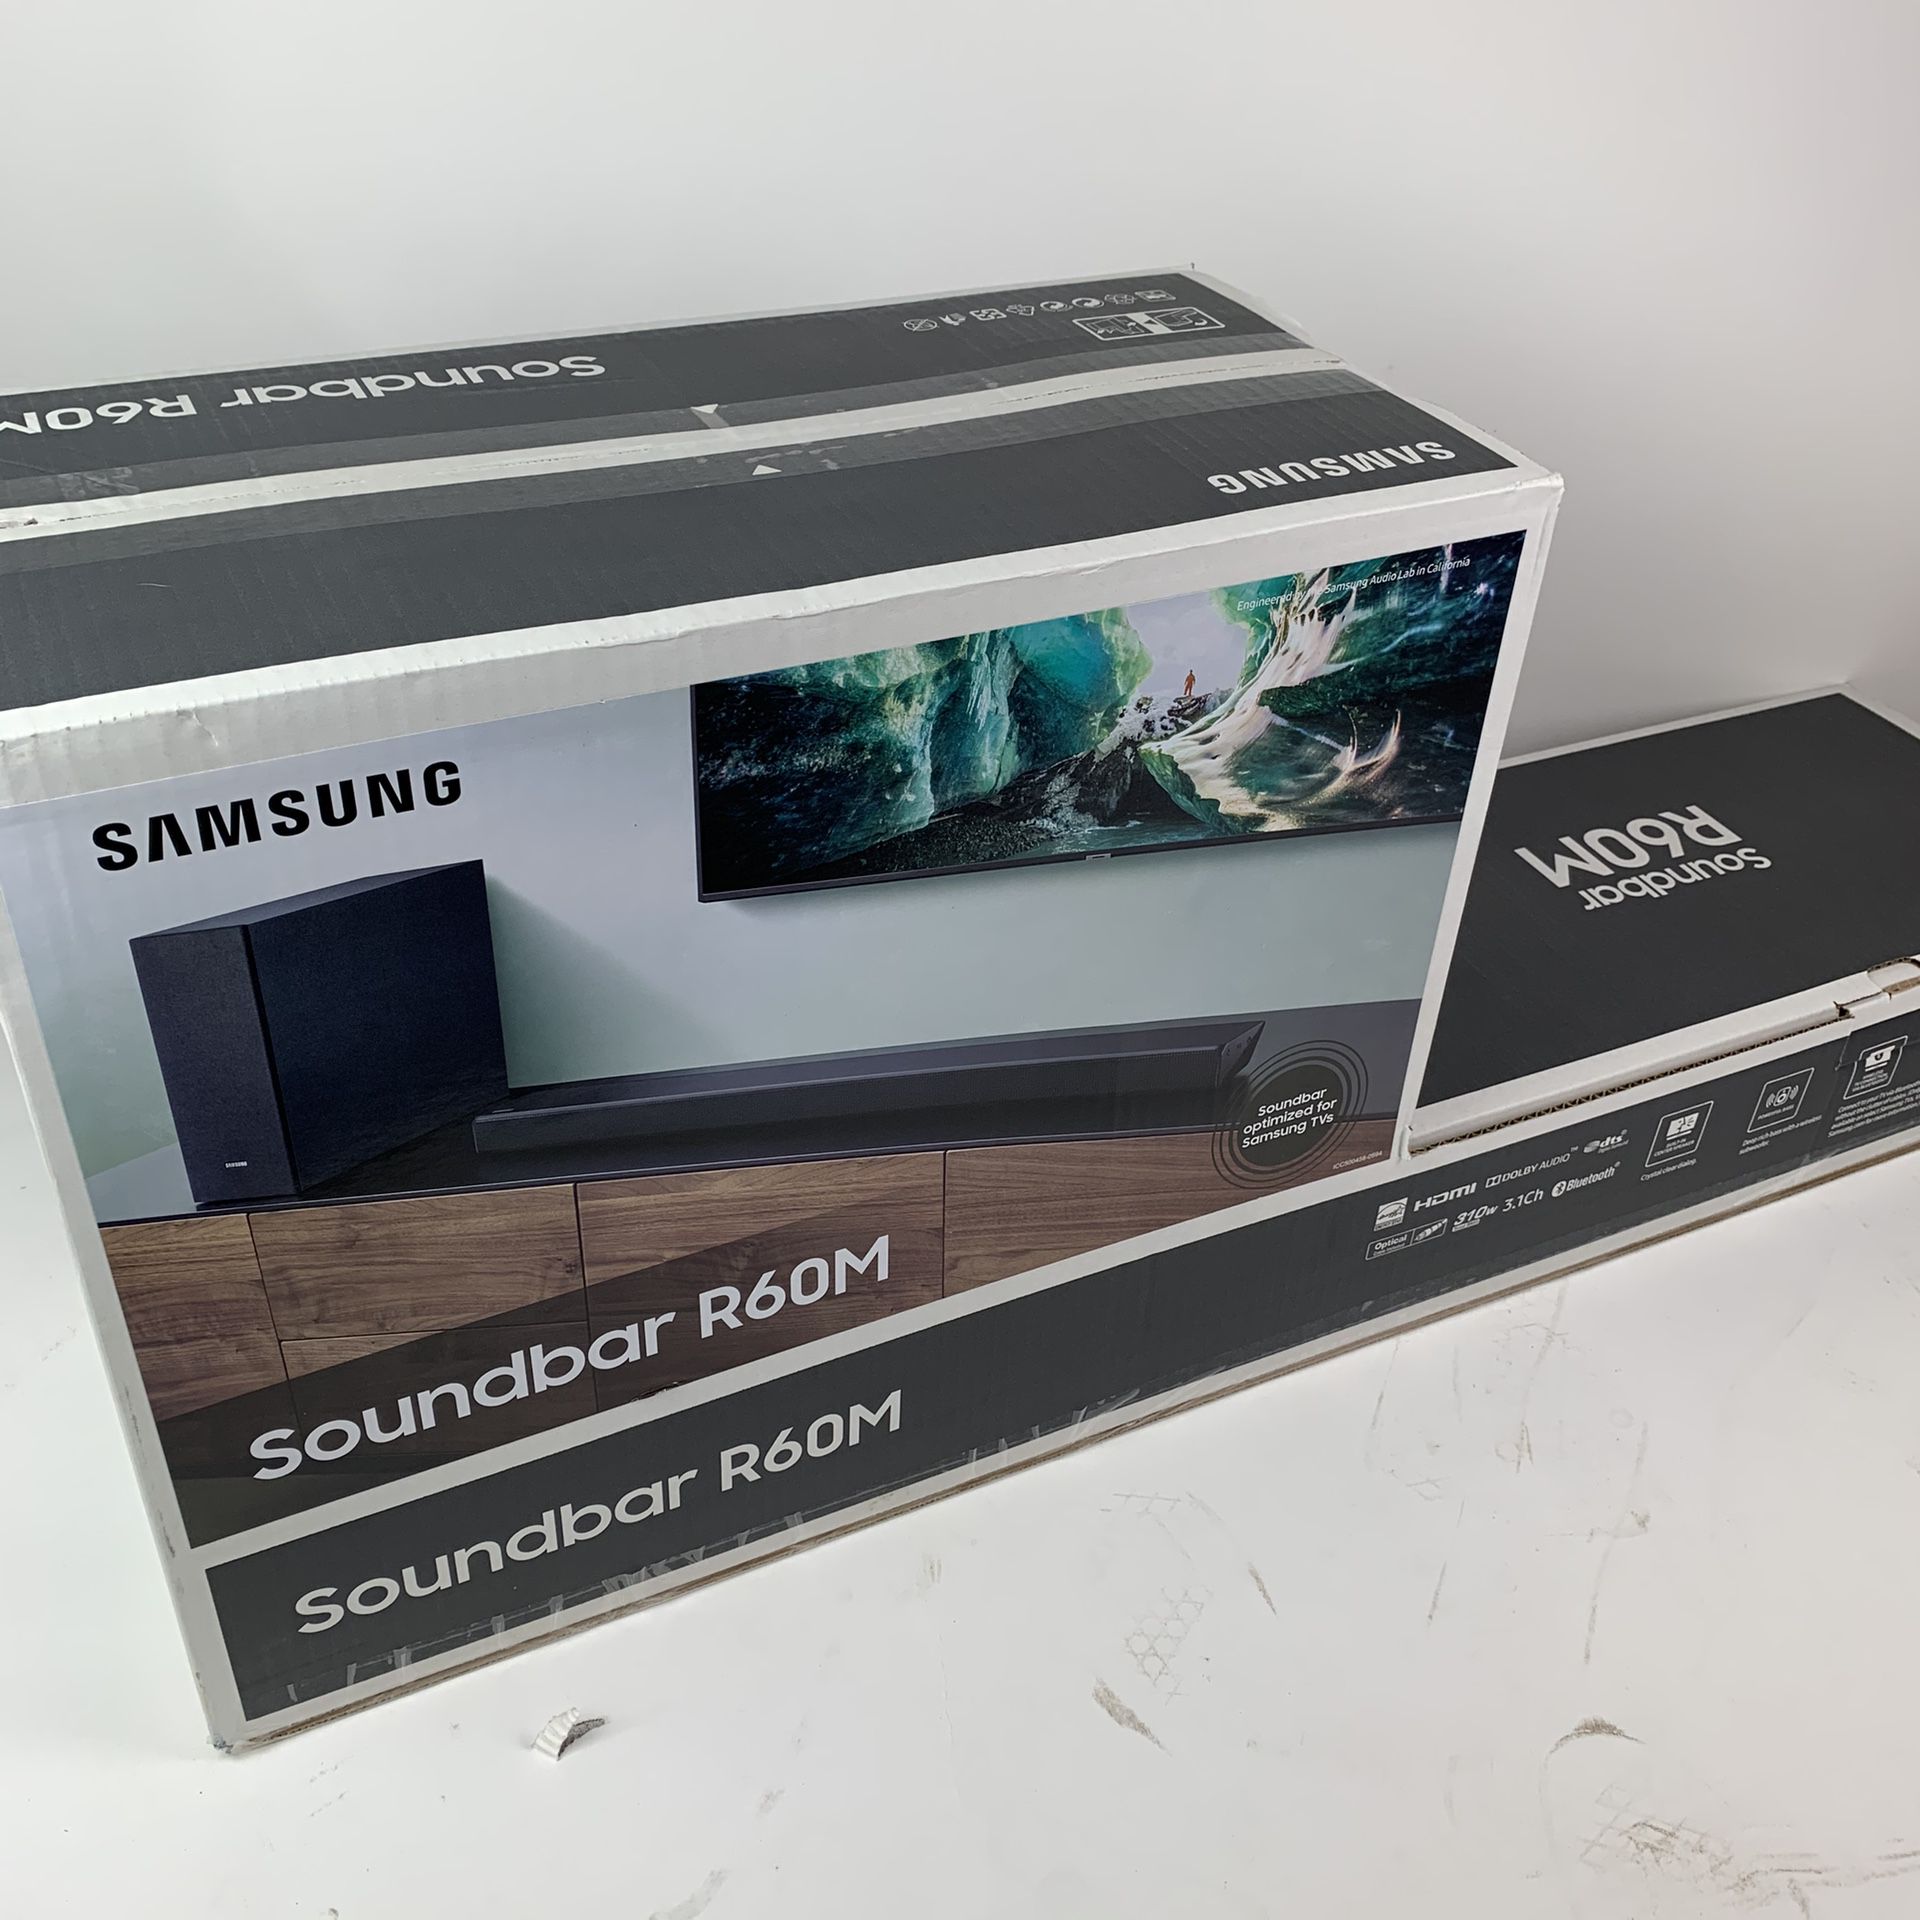 Samsung R60M soundbar & subwoofer